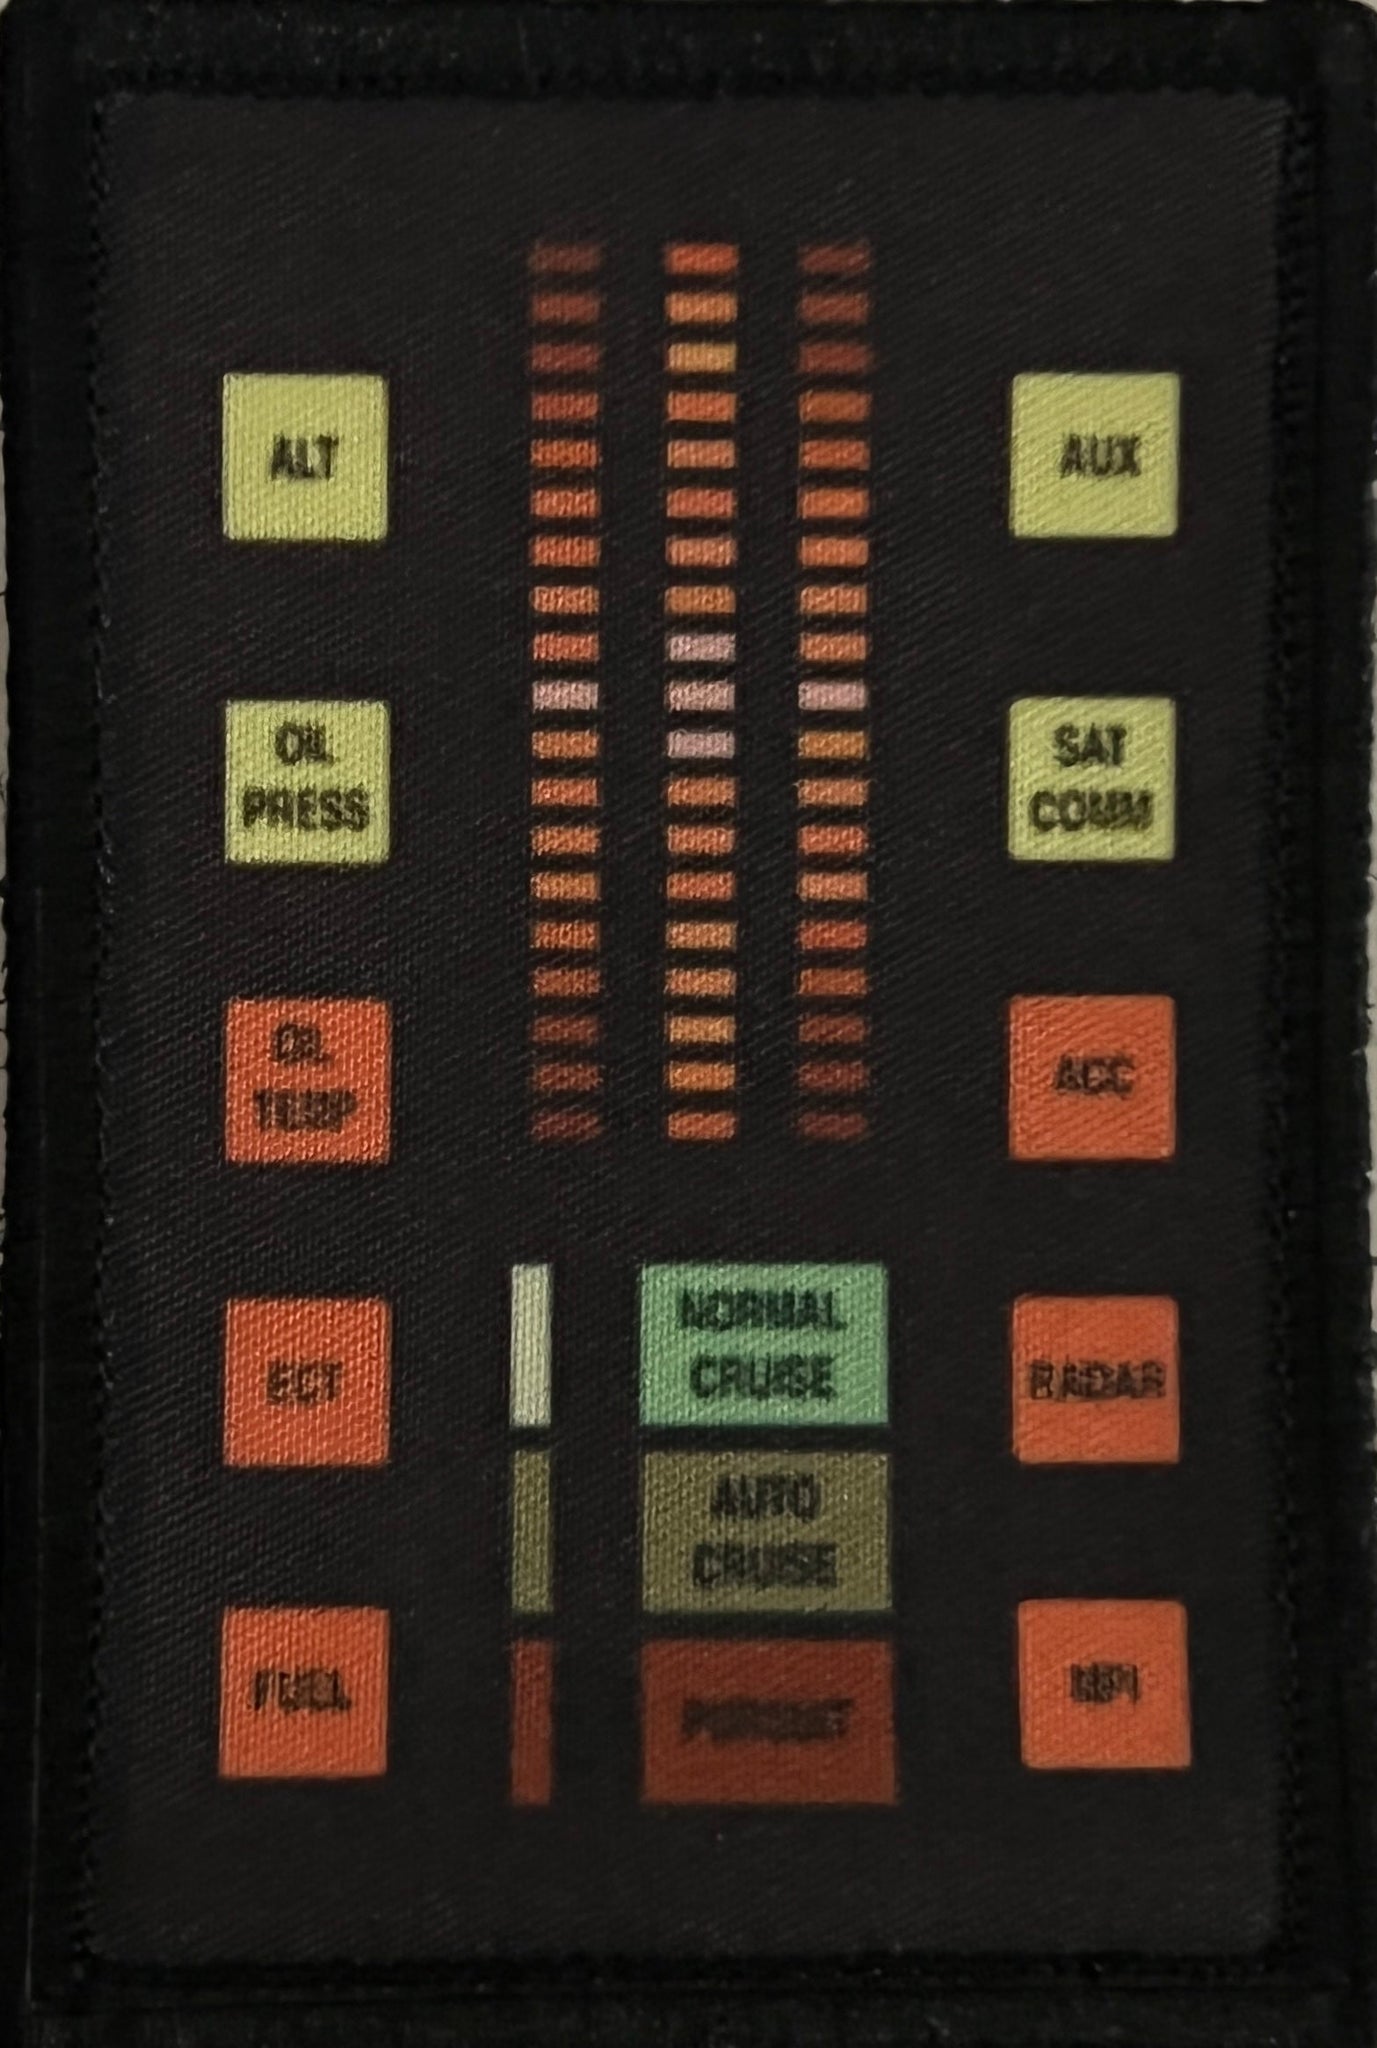 Knight Rider Control Panel